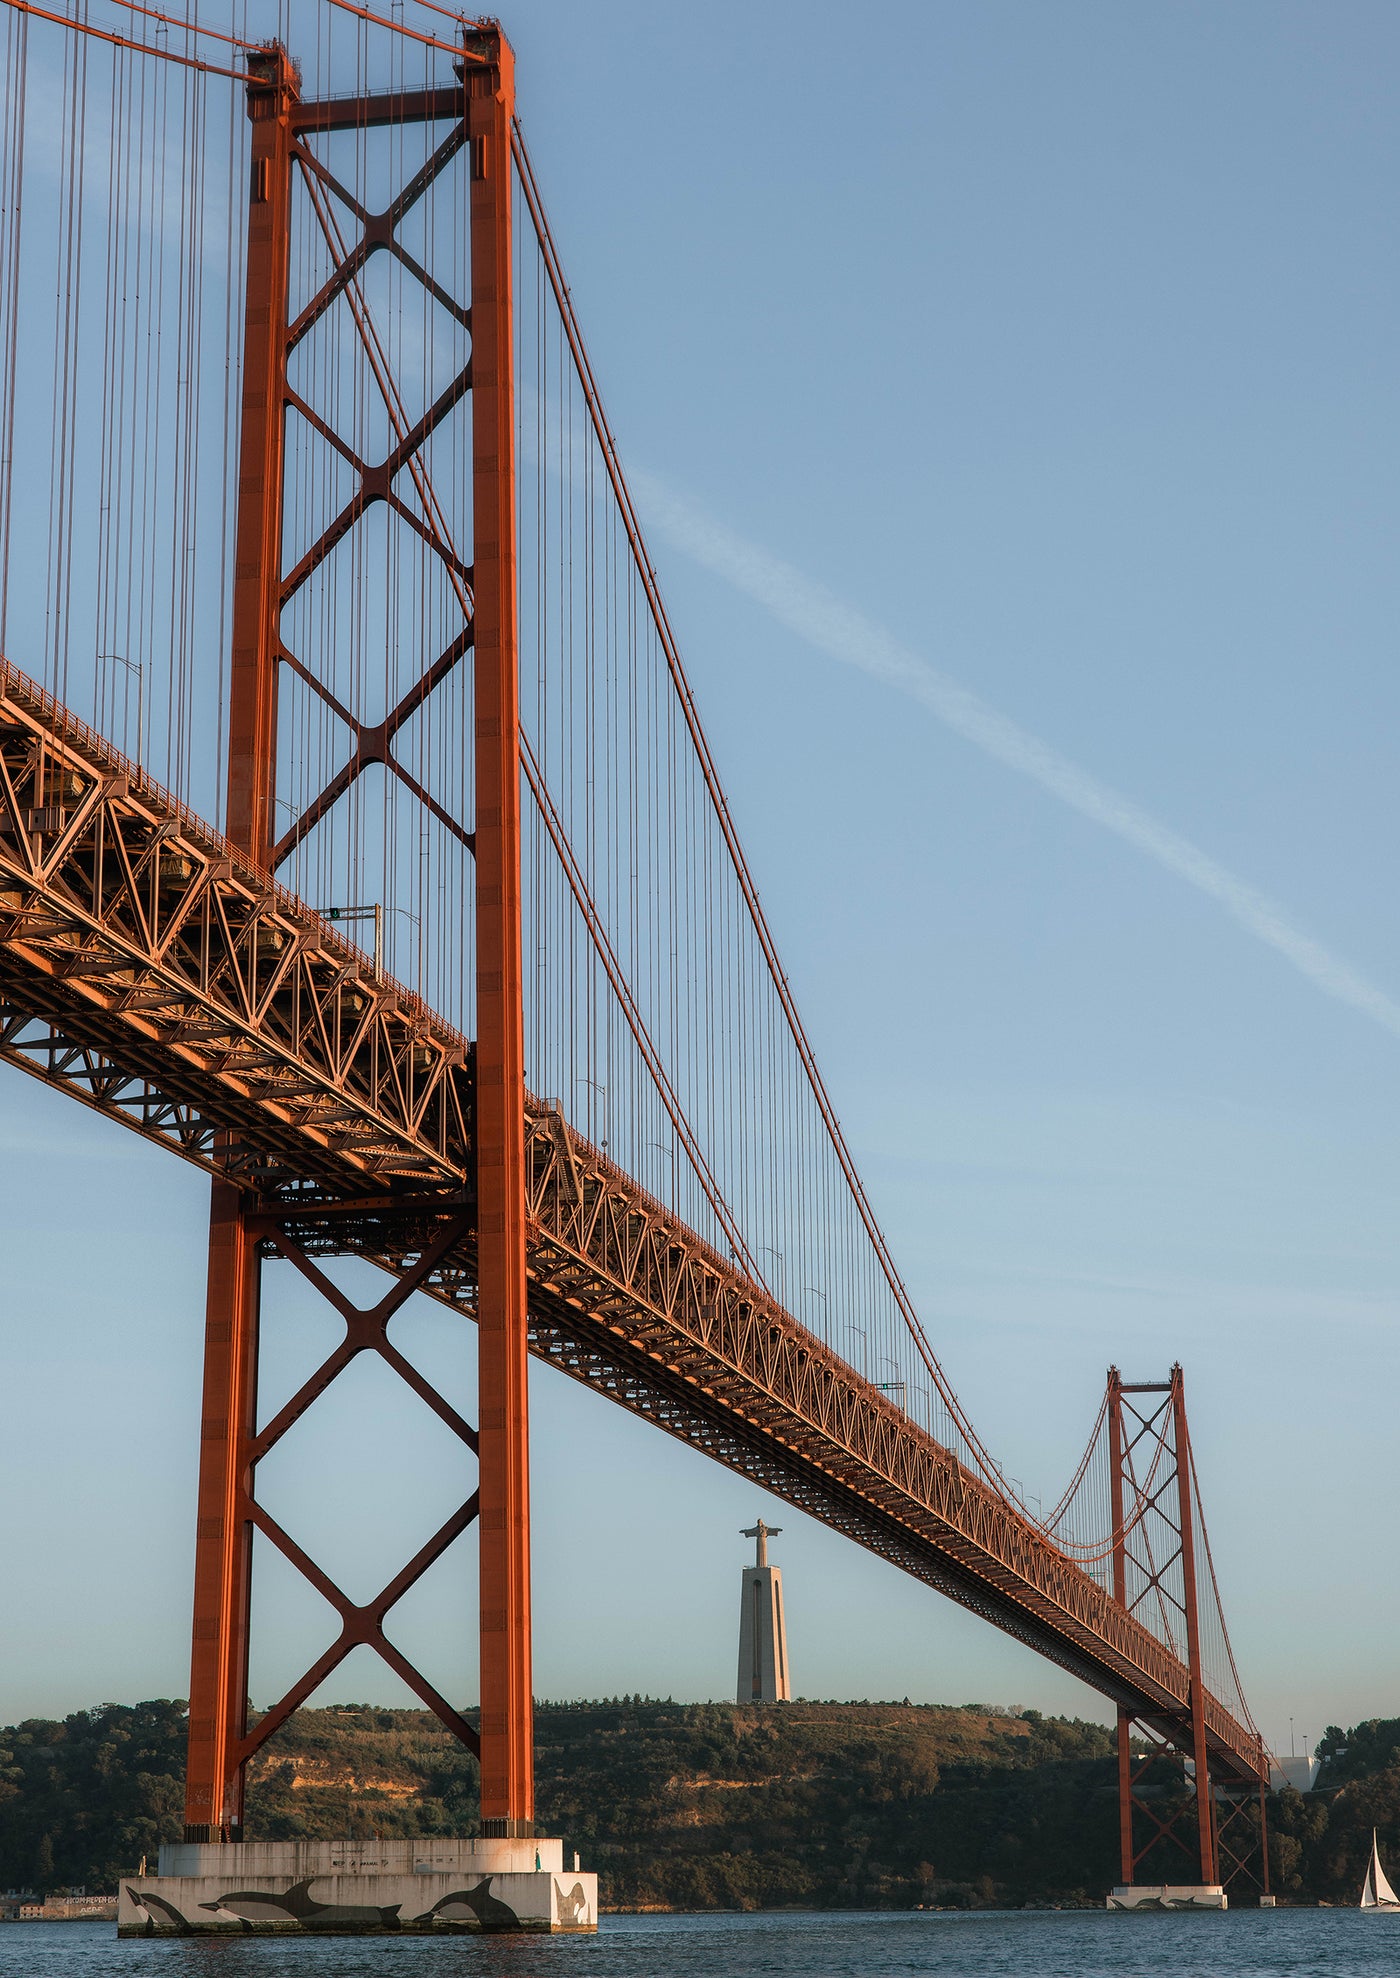 The Ponte Lisbon